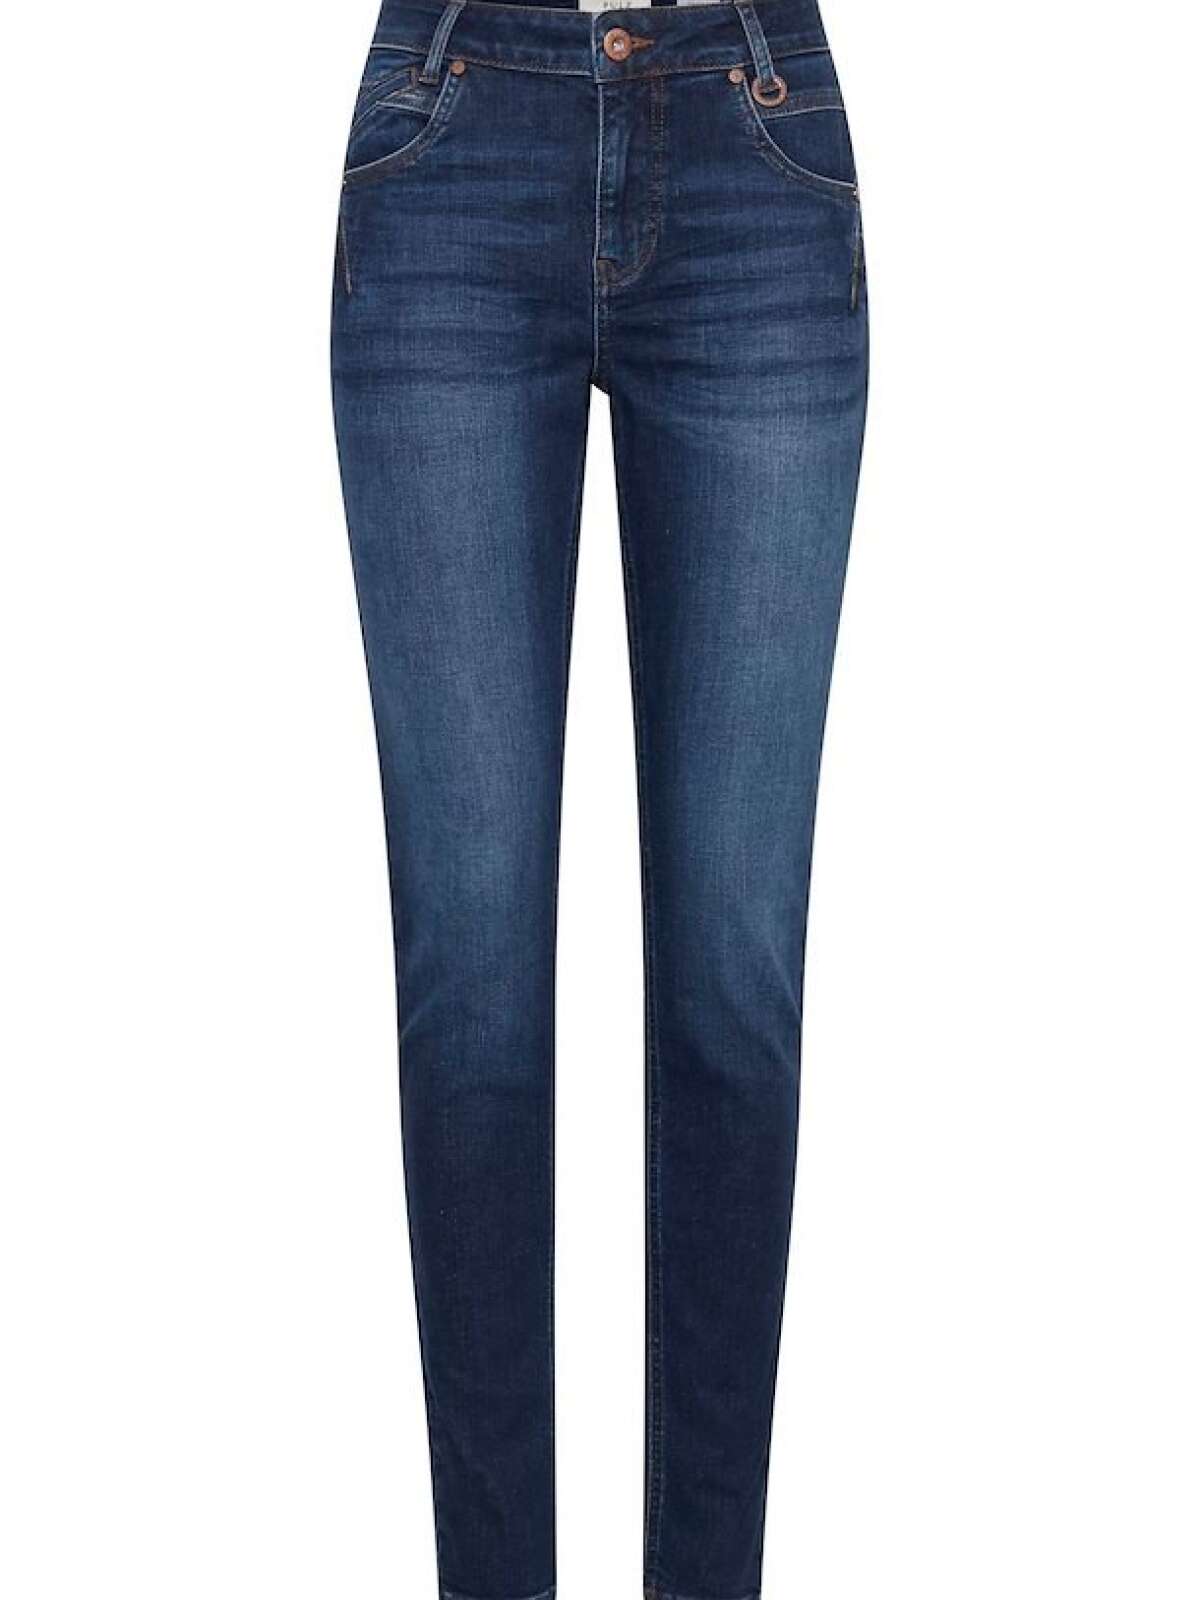 Emma jeans | Pulz jeans | Shop her